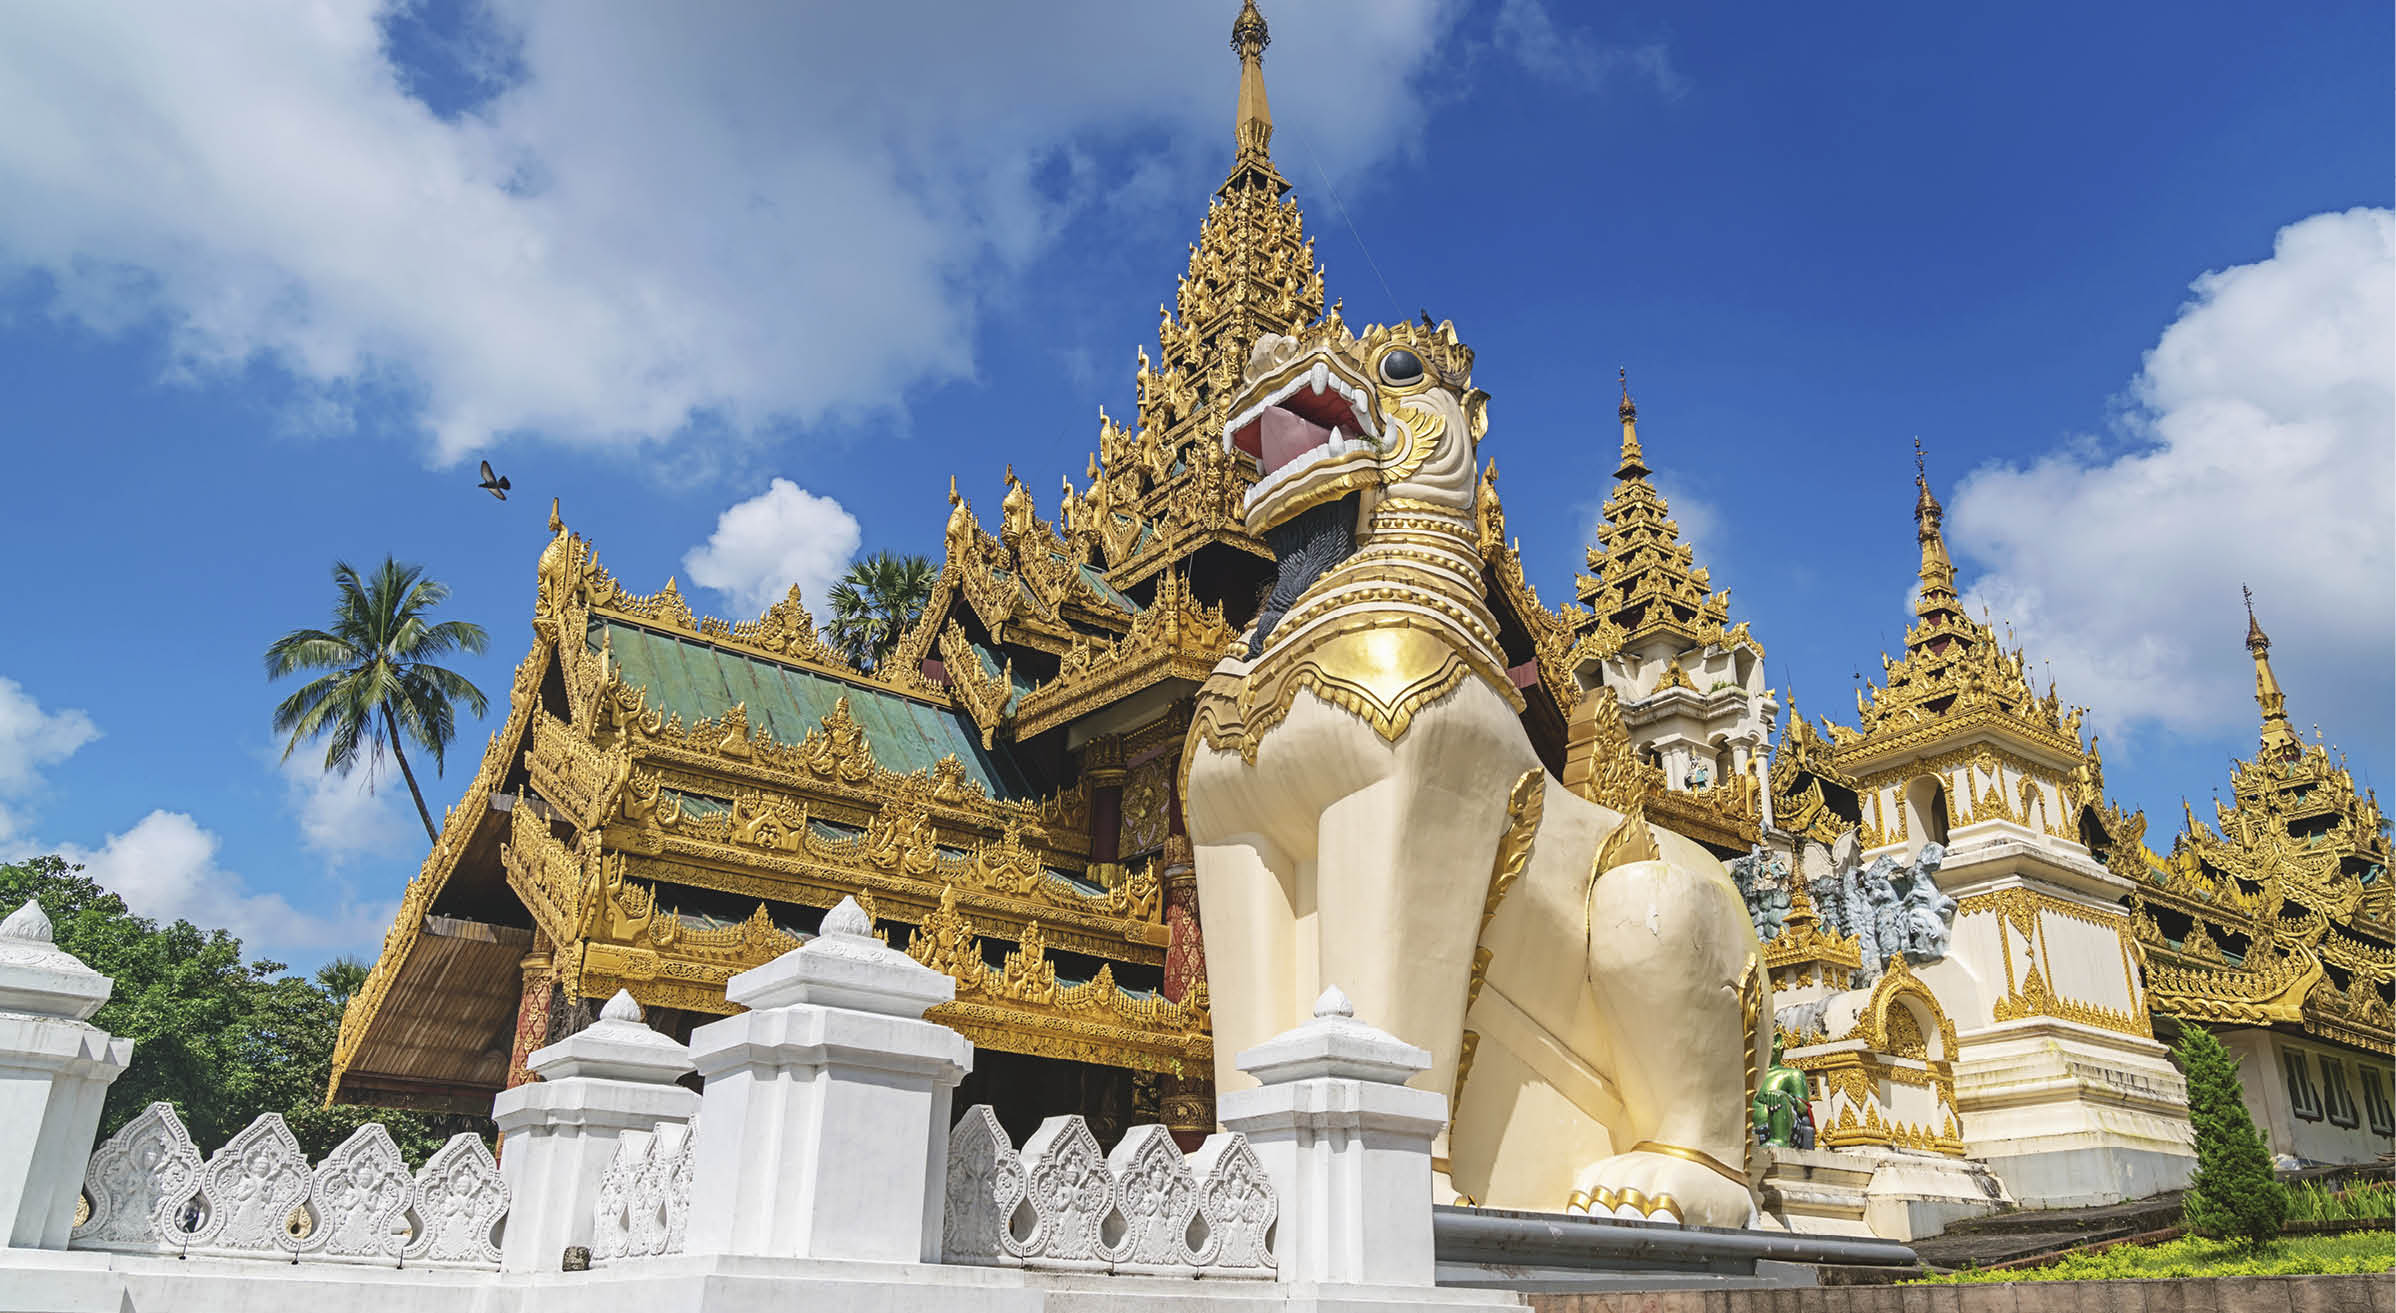 Golden ornamental south entrance gate with huge dragon statues to the famous Shwedagon Pagoda (Stupa) in downtown Yangon (Rangoon), Myanmar, Asia